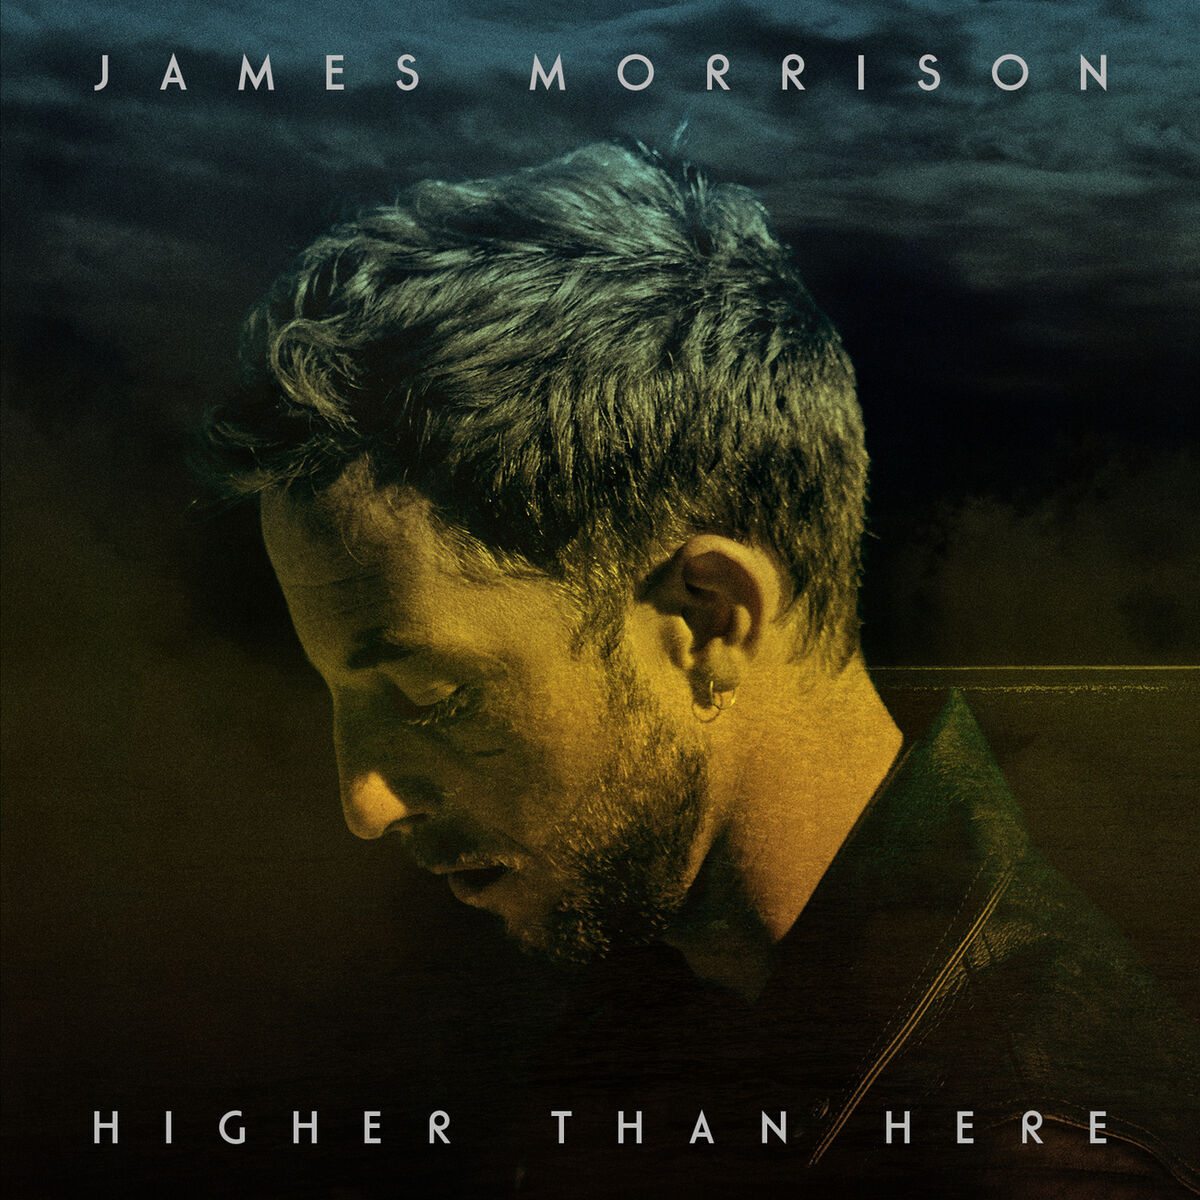 James Morrison: albums